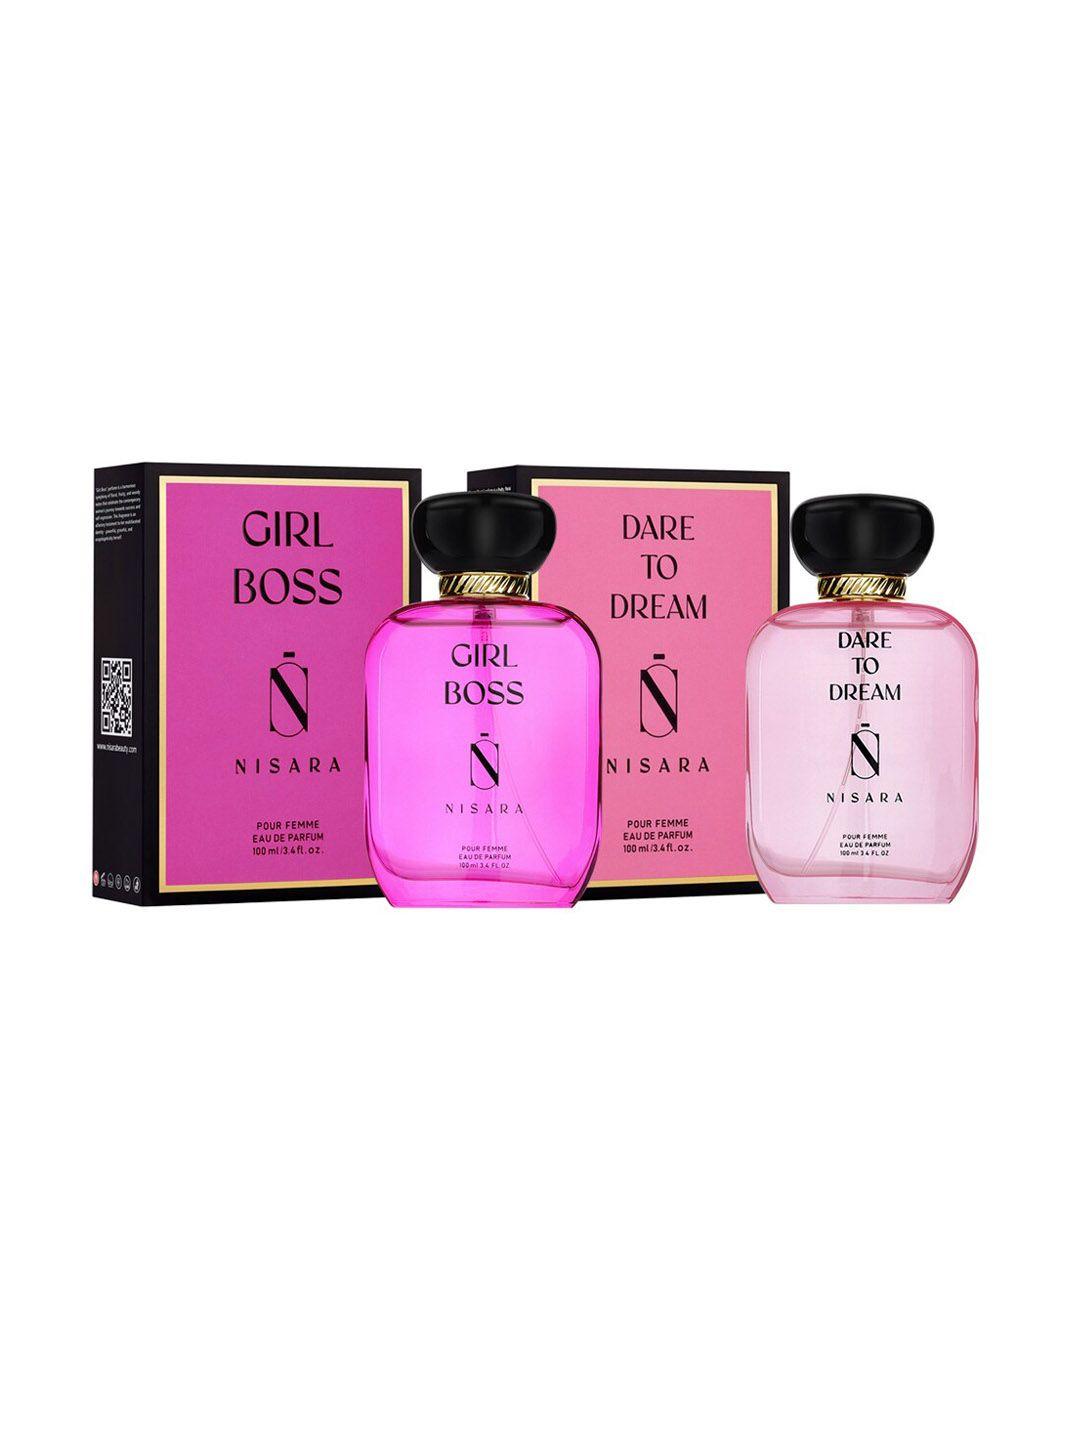 nisara set of 2 girl boss & dare to dream eau de perfume - 100ml each